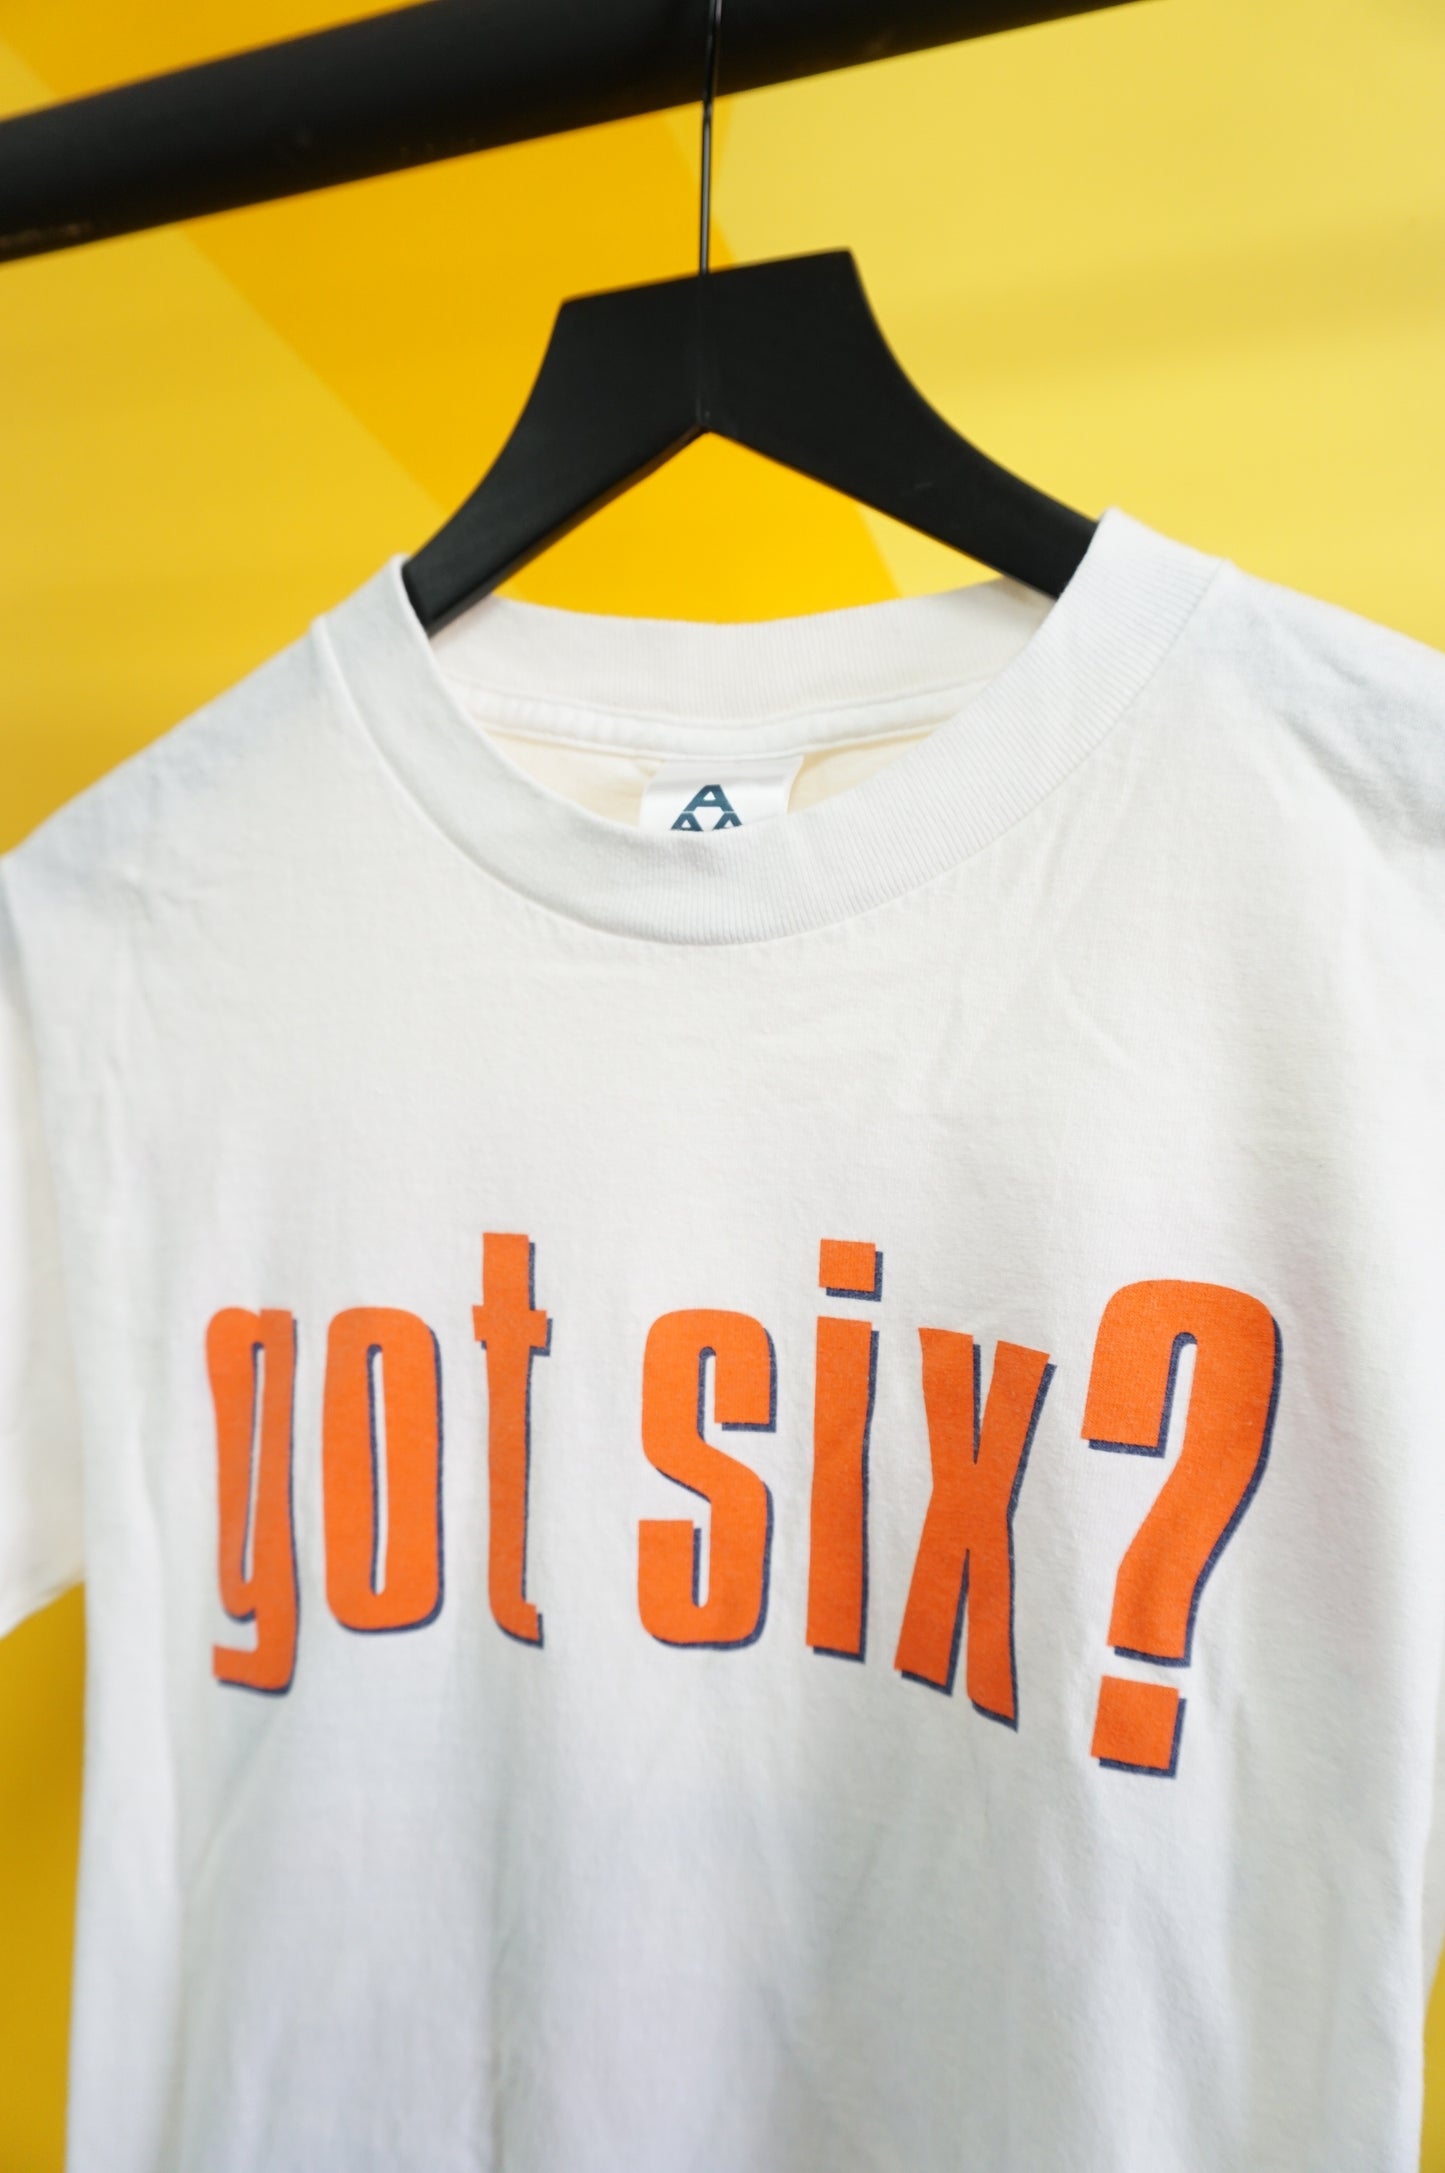 (S) Got Six? We Do! Alabama vs Auburn Iron Bowl T-Shirt